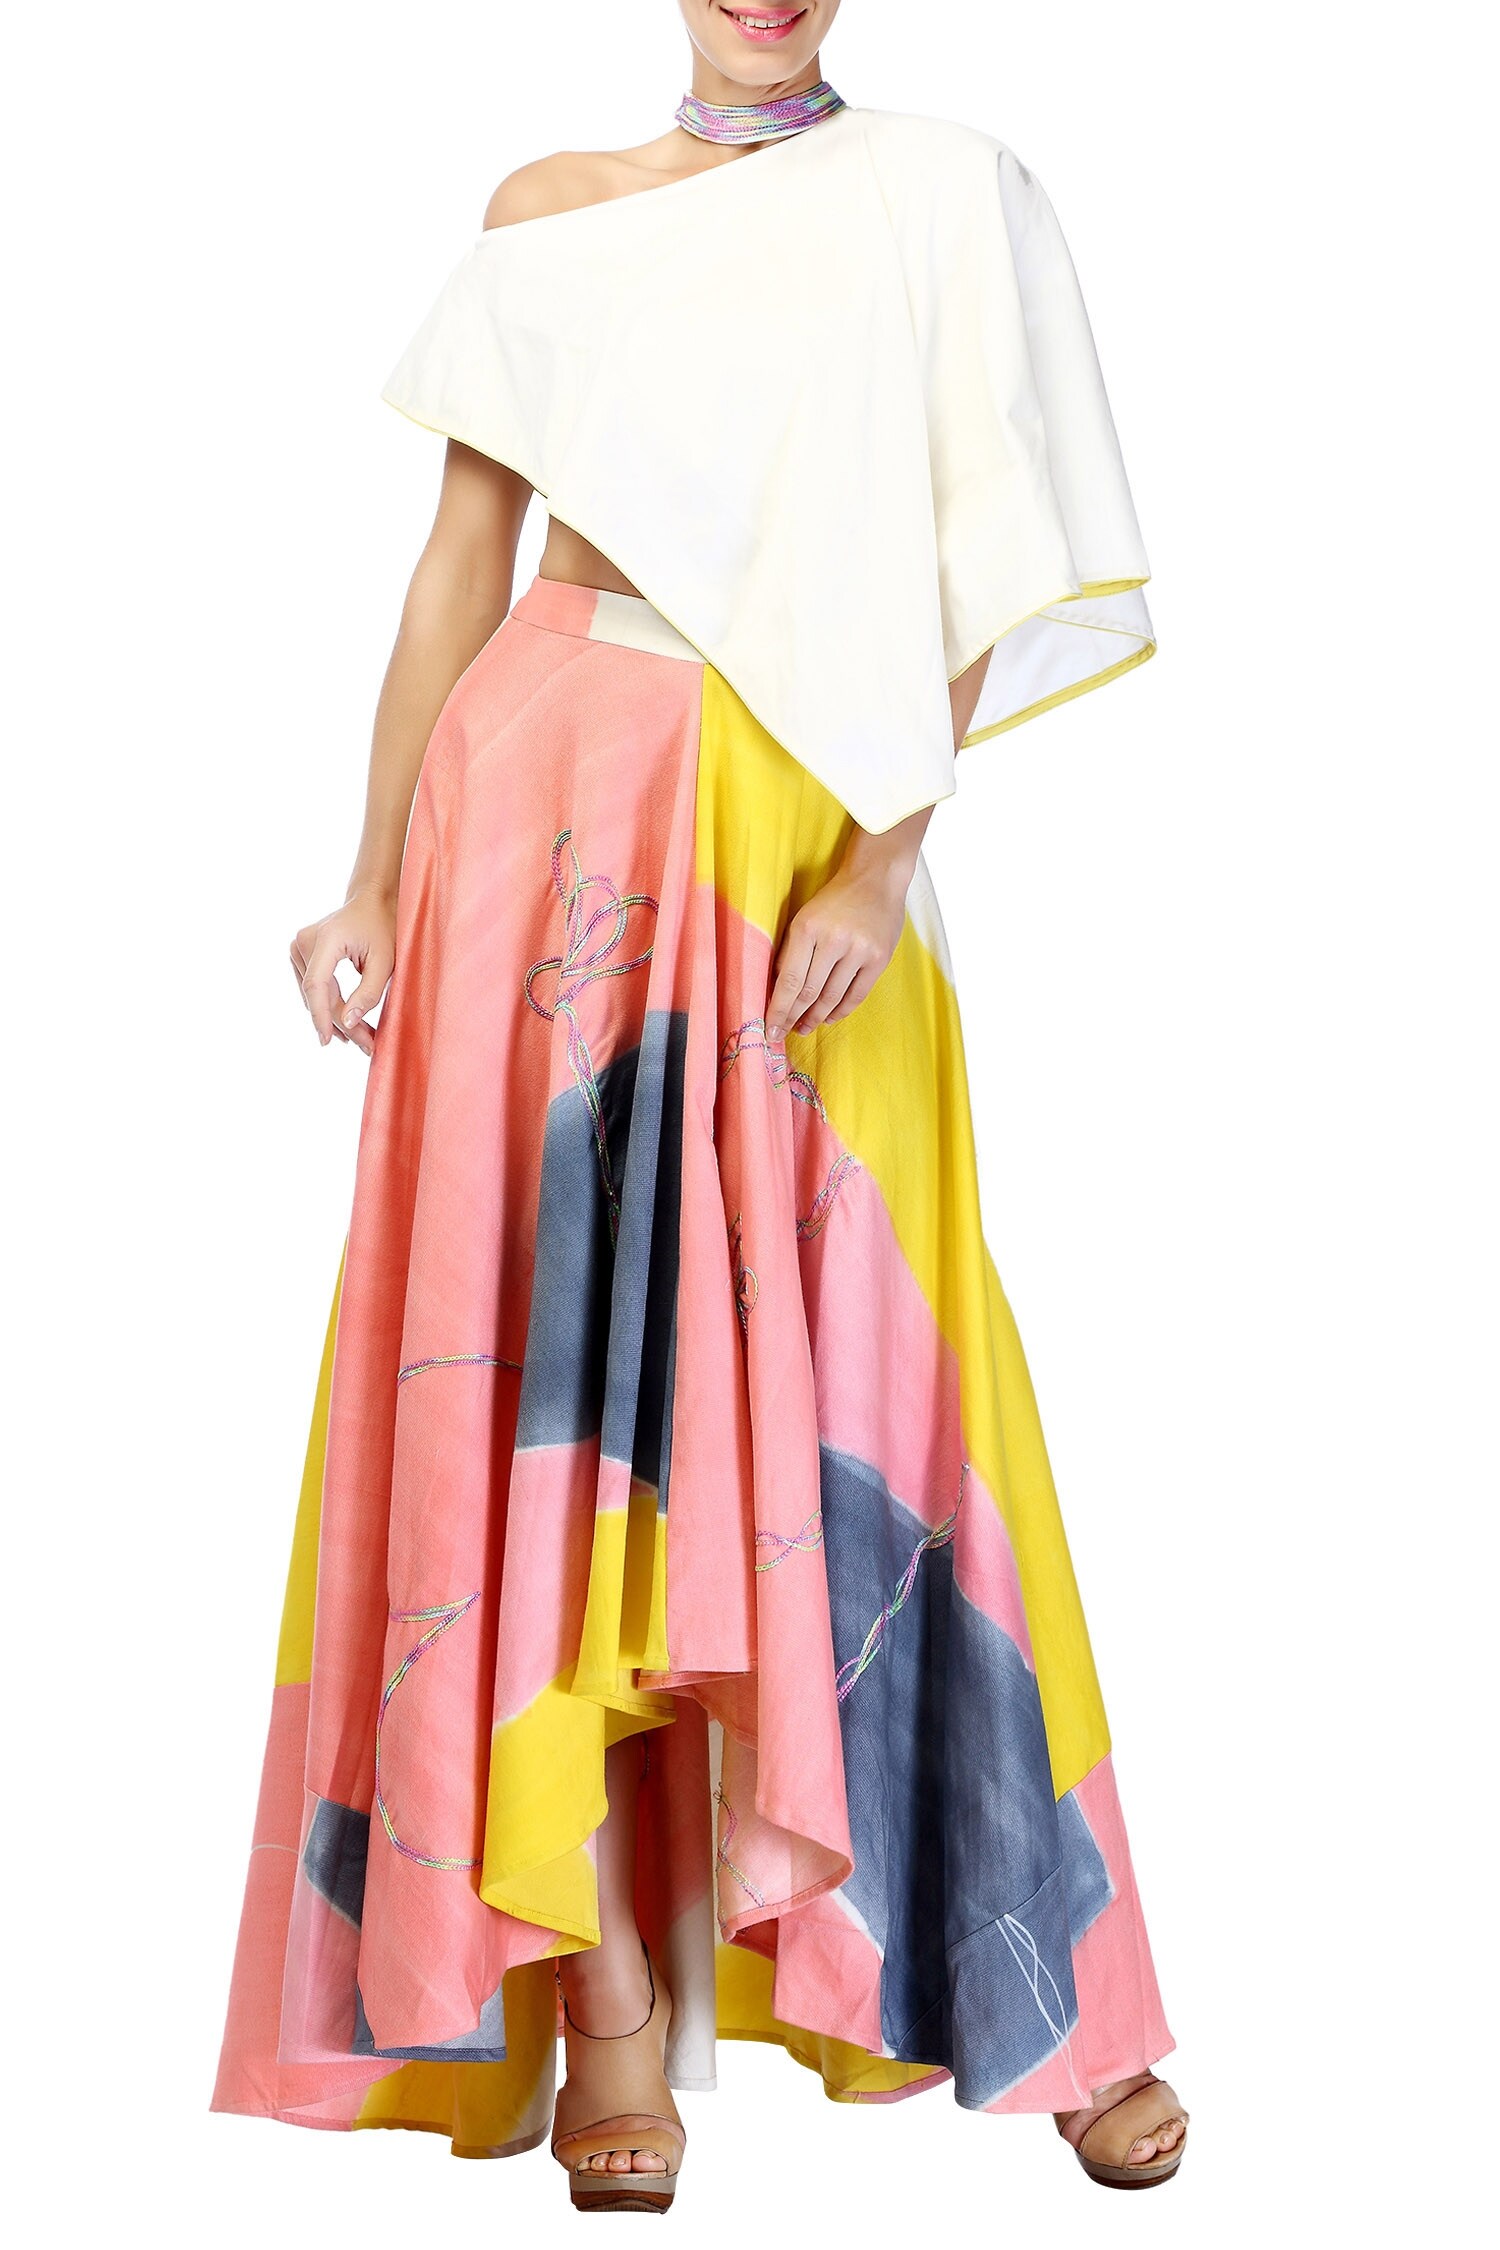 Buy Multicolored skirt set by Vedika M at Aza Fashions